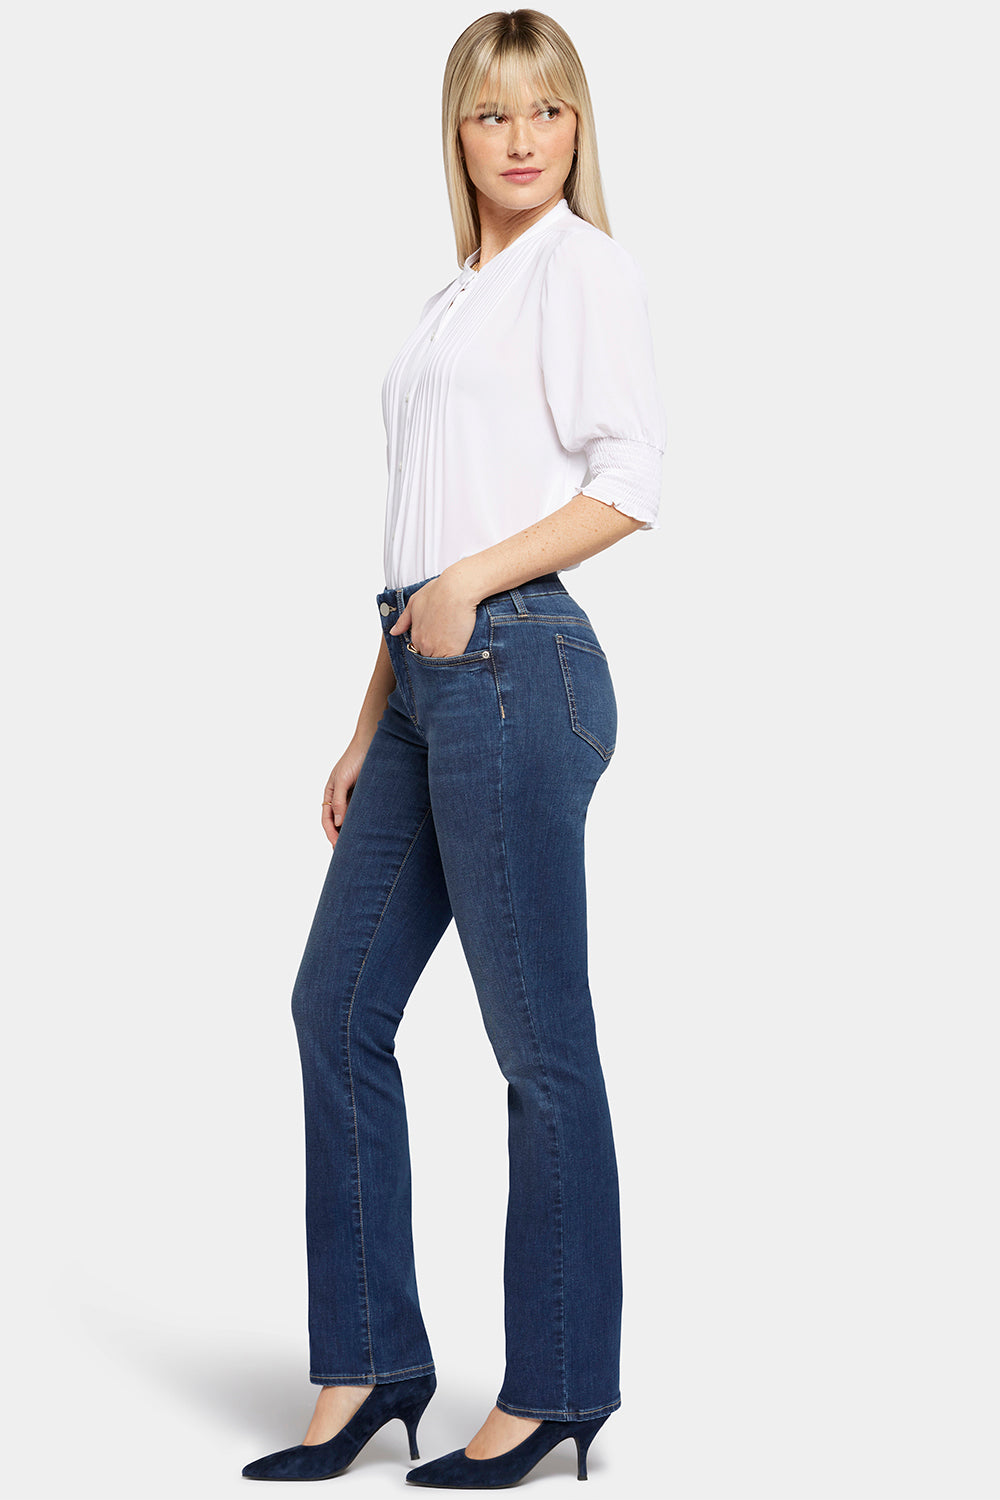 NYDJ Womens Burgundy Straight leg Jeans Size: 0 